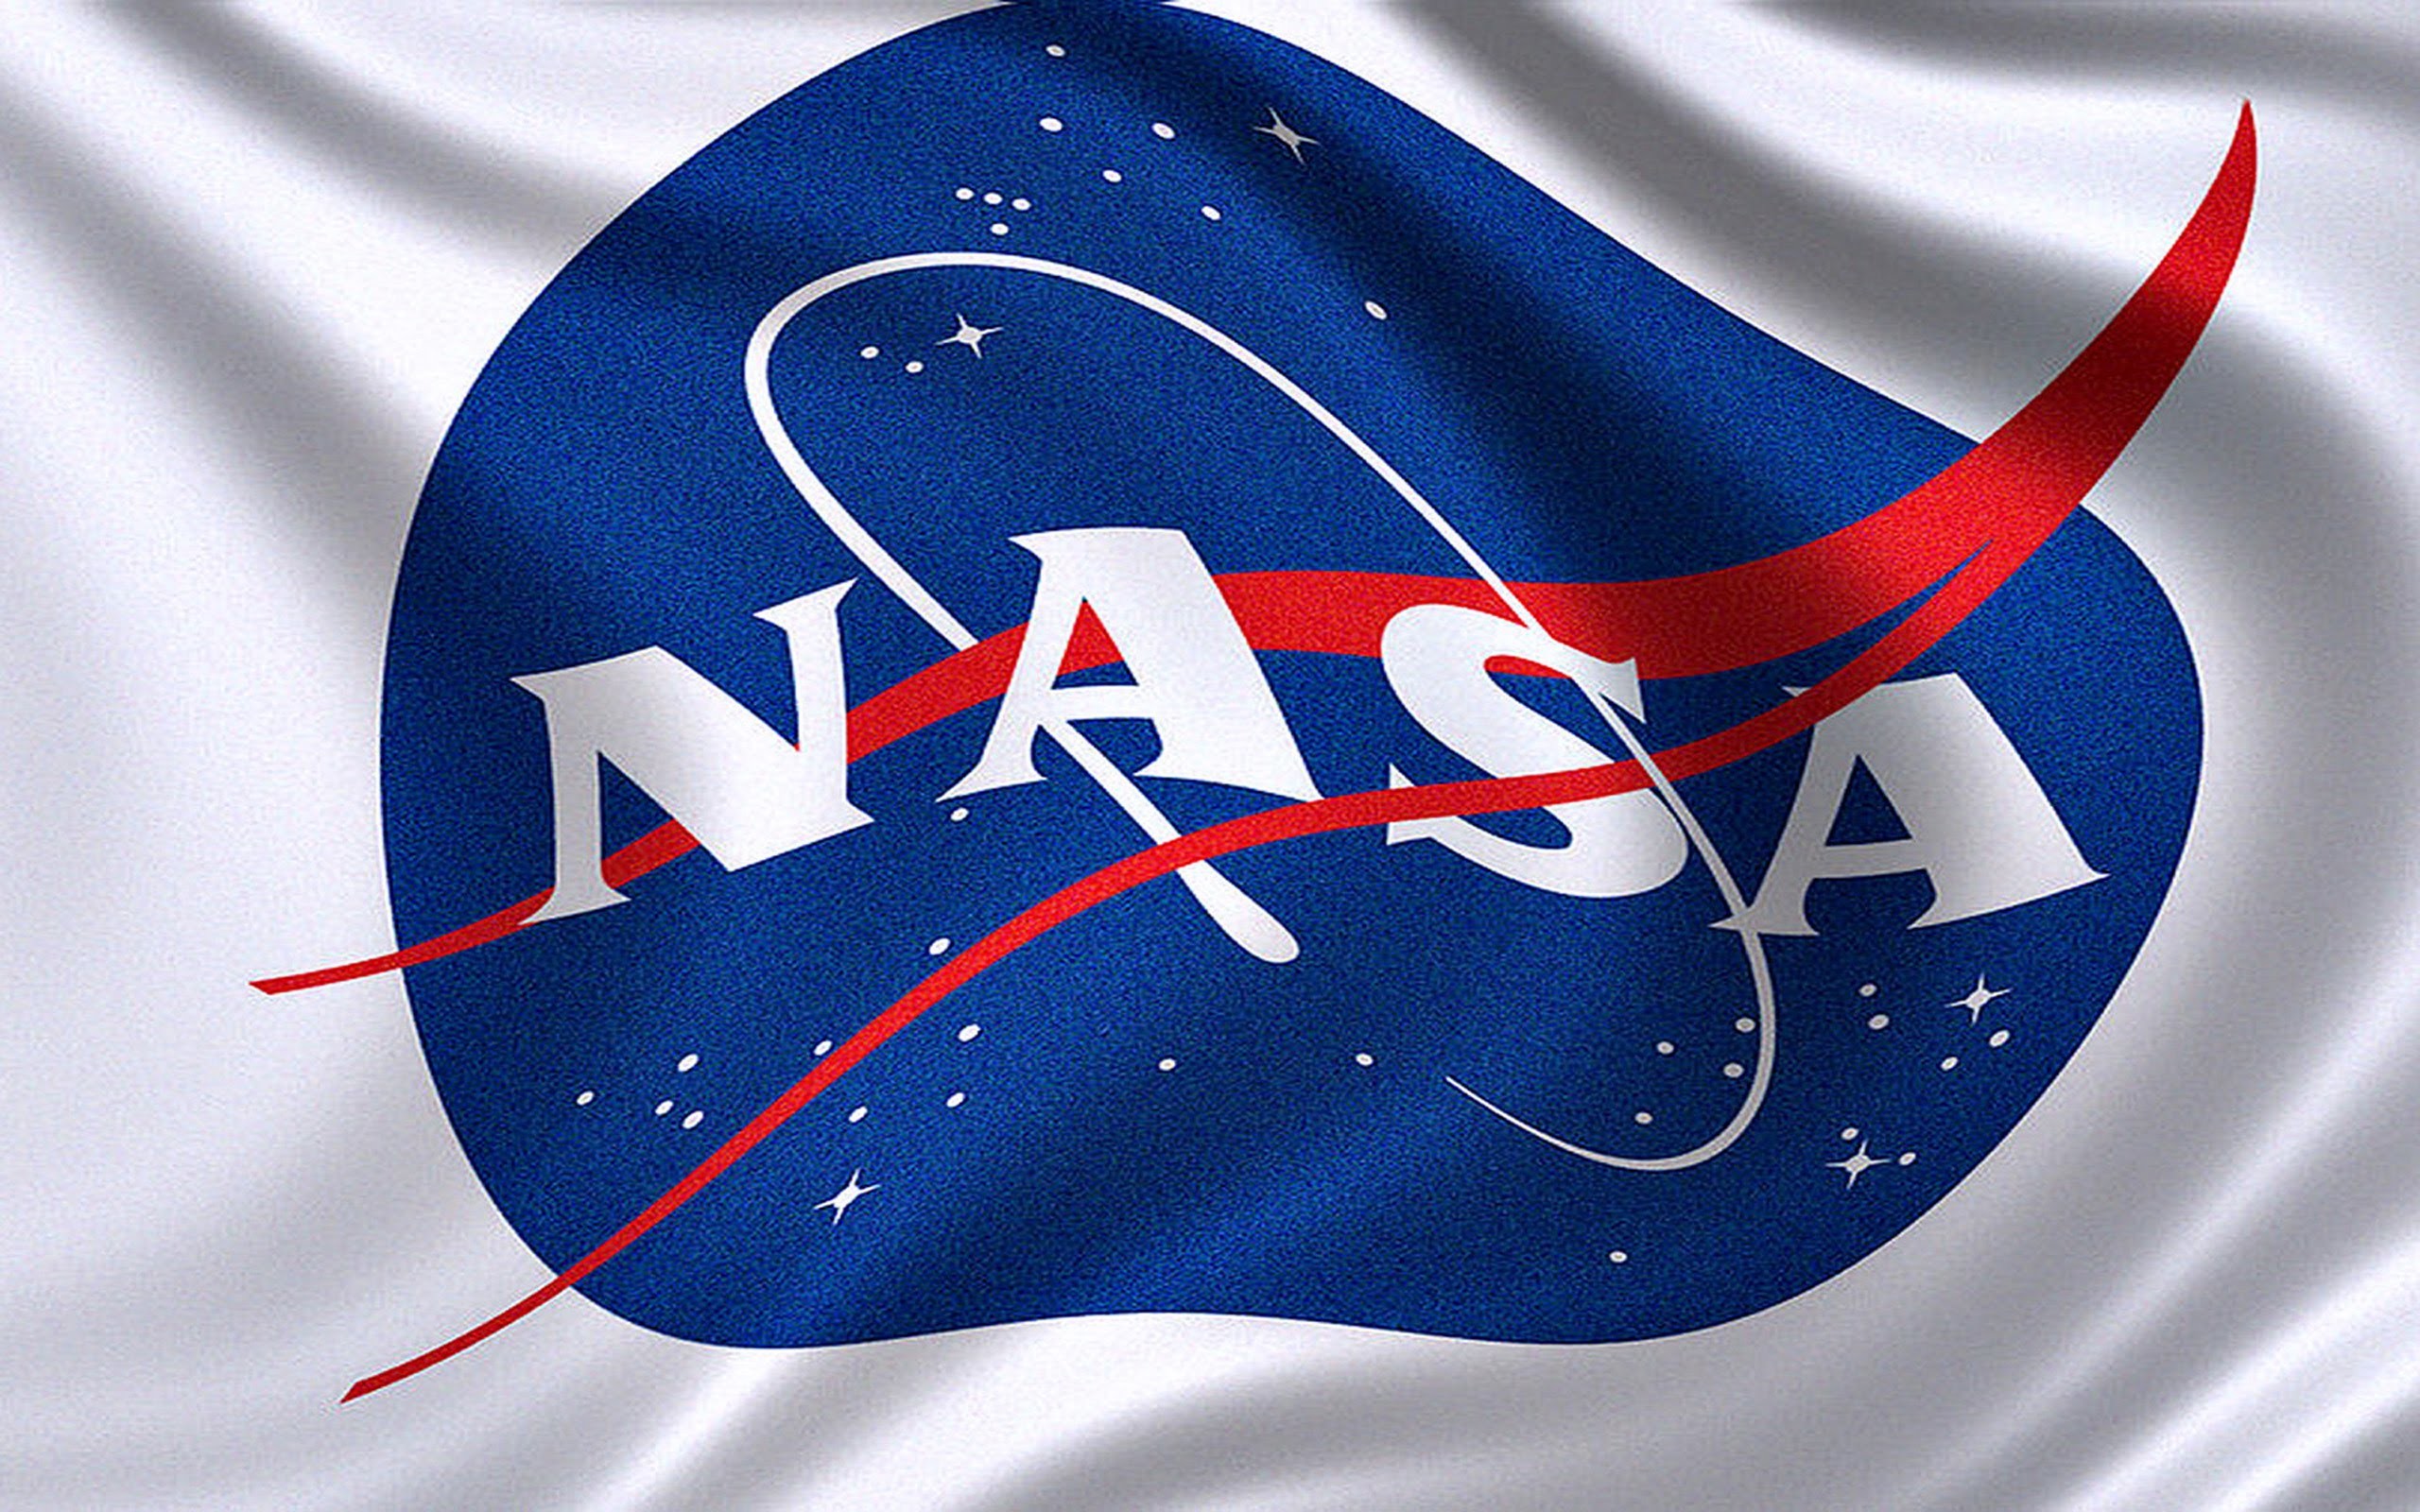 2560x1600 NASA Unexplained Files 2015 Exposed Photo Expert Reveals PsyOp - YouTube